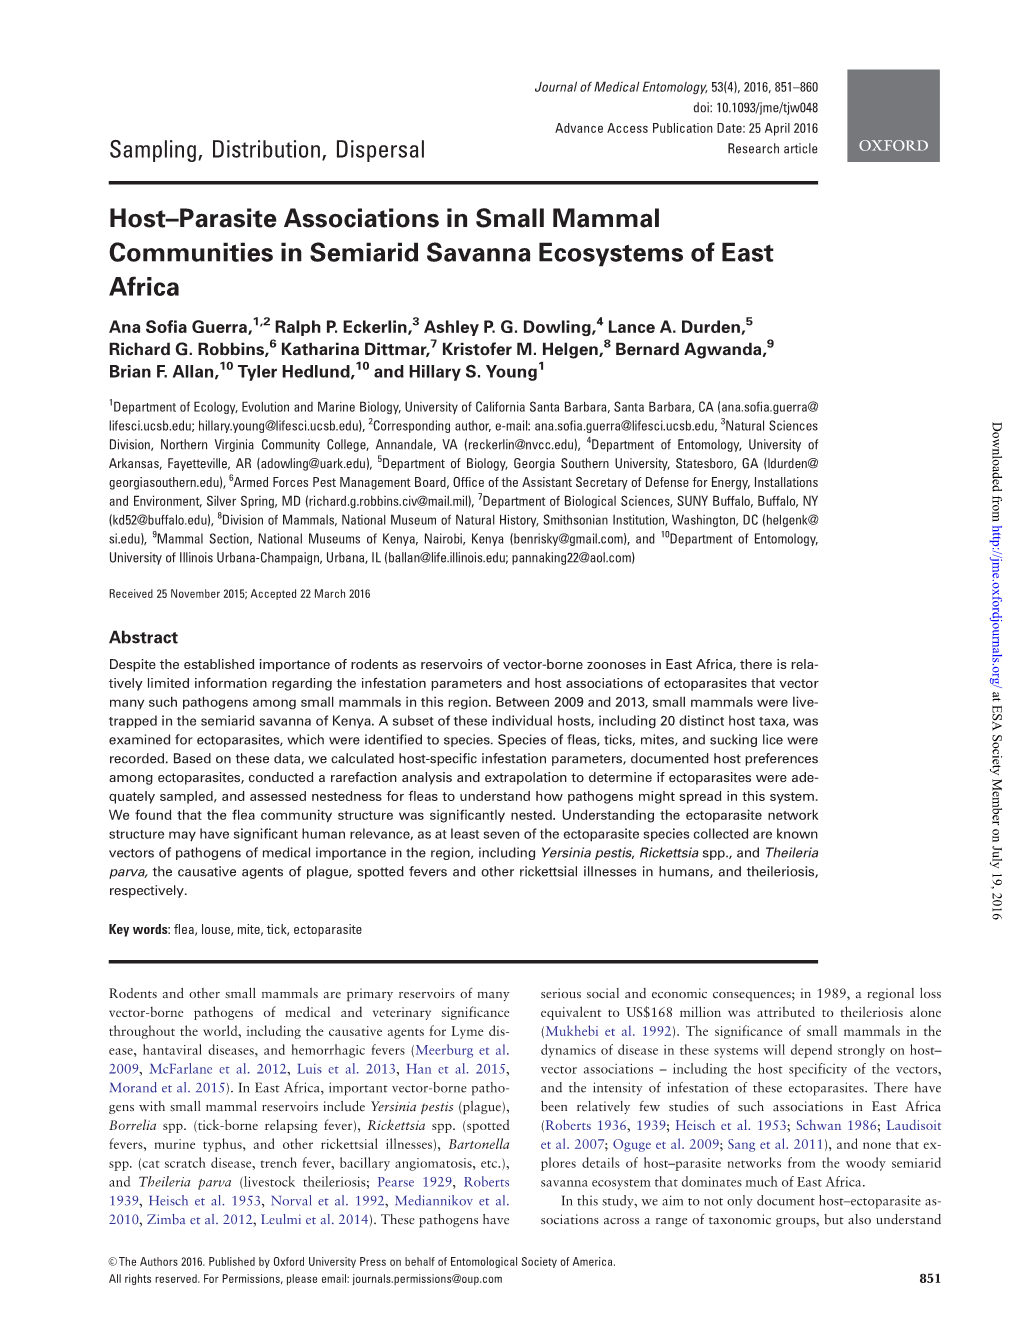 Host–Parasite Associations in Small Mammal Communities in Semiarid Savanna Ecosystems of East Africa